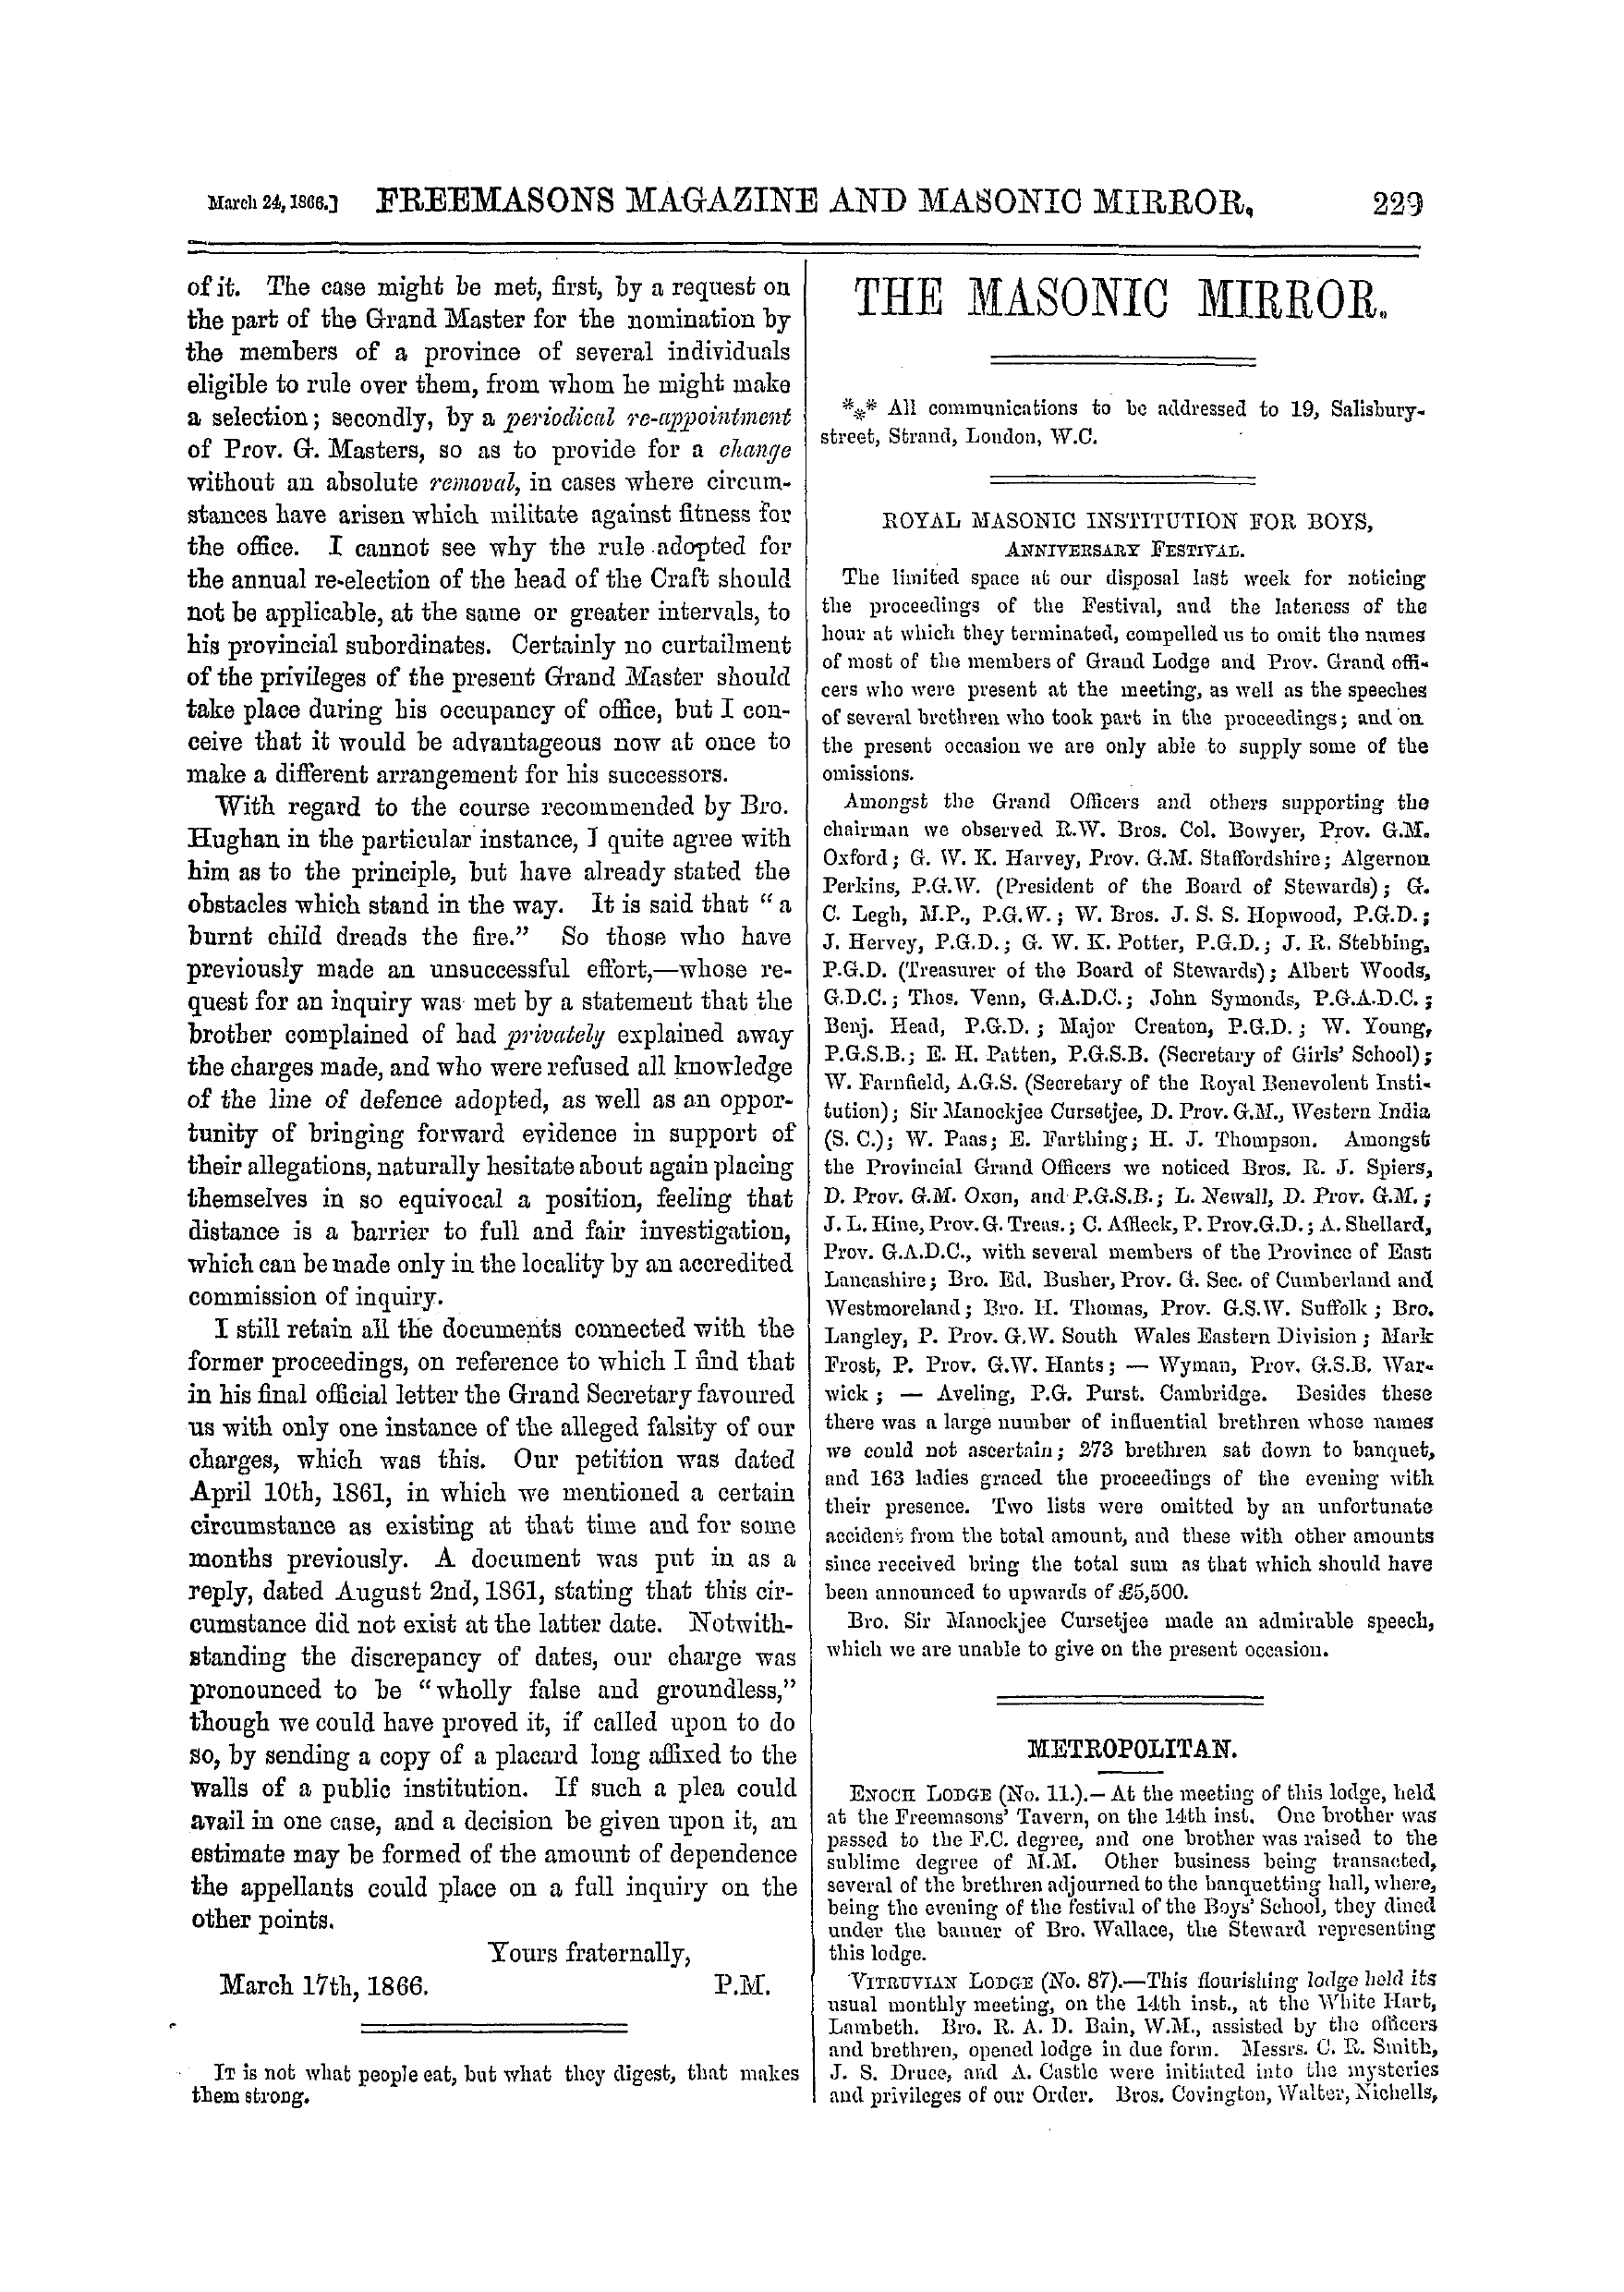 The Freemasons' Monthly Magazine: 1866-03-24 - Metropolitan.